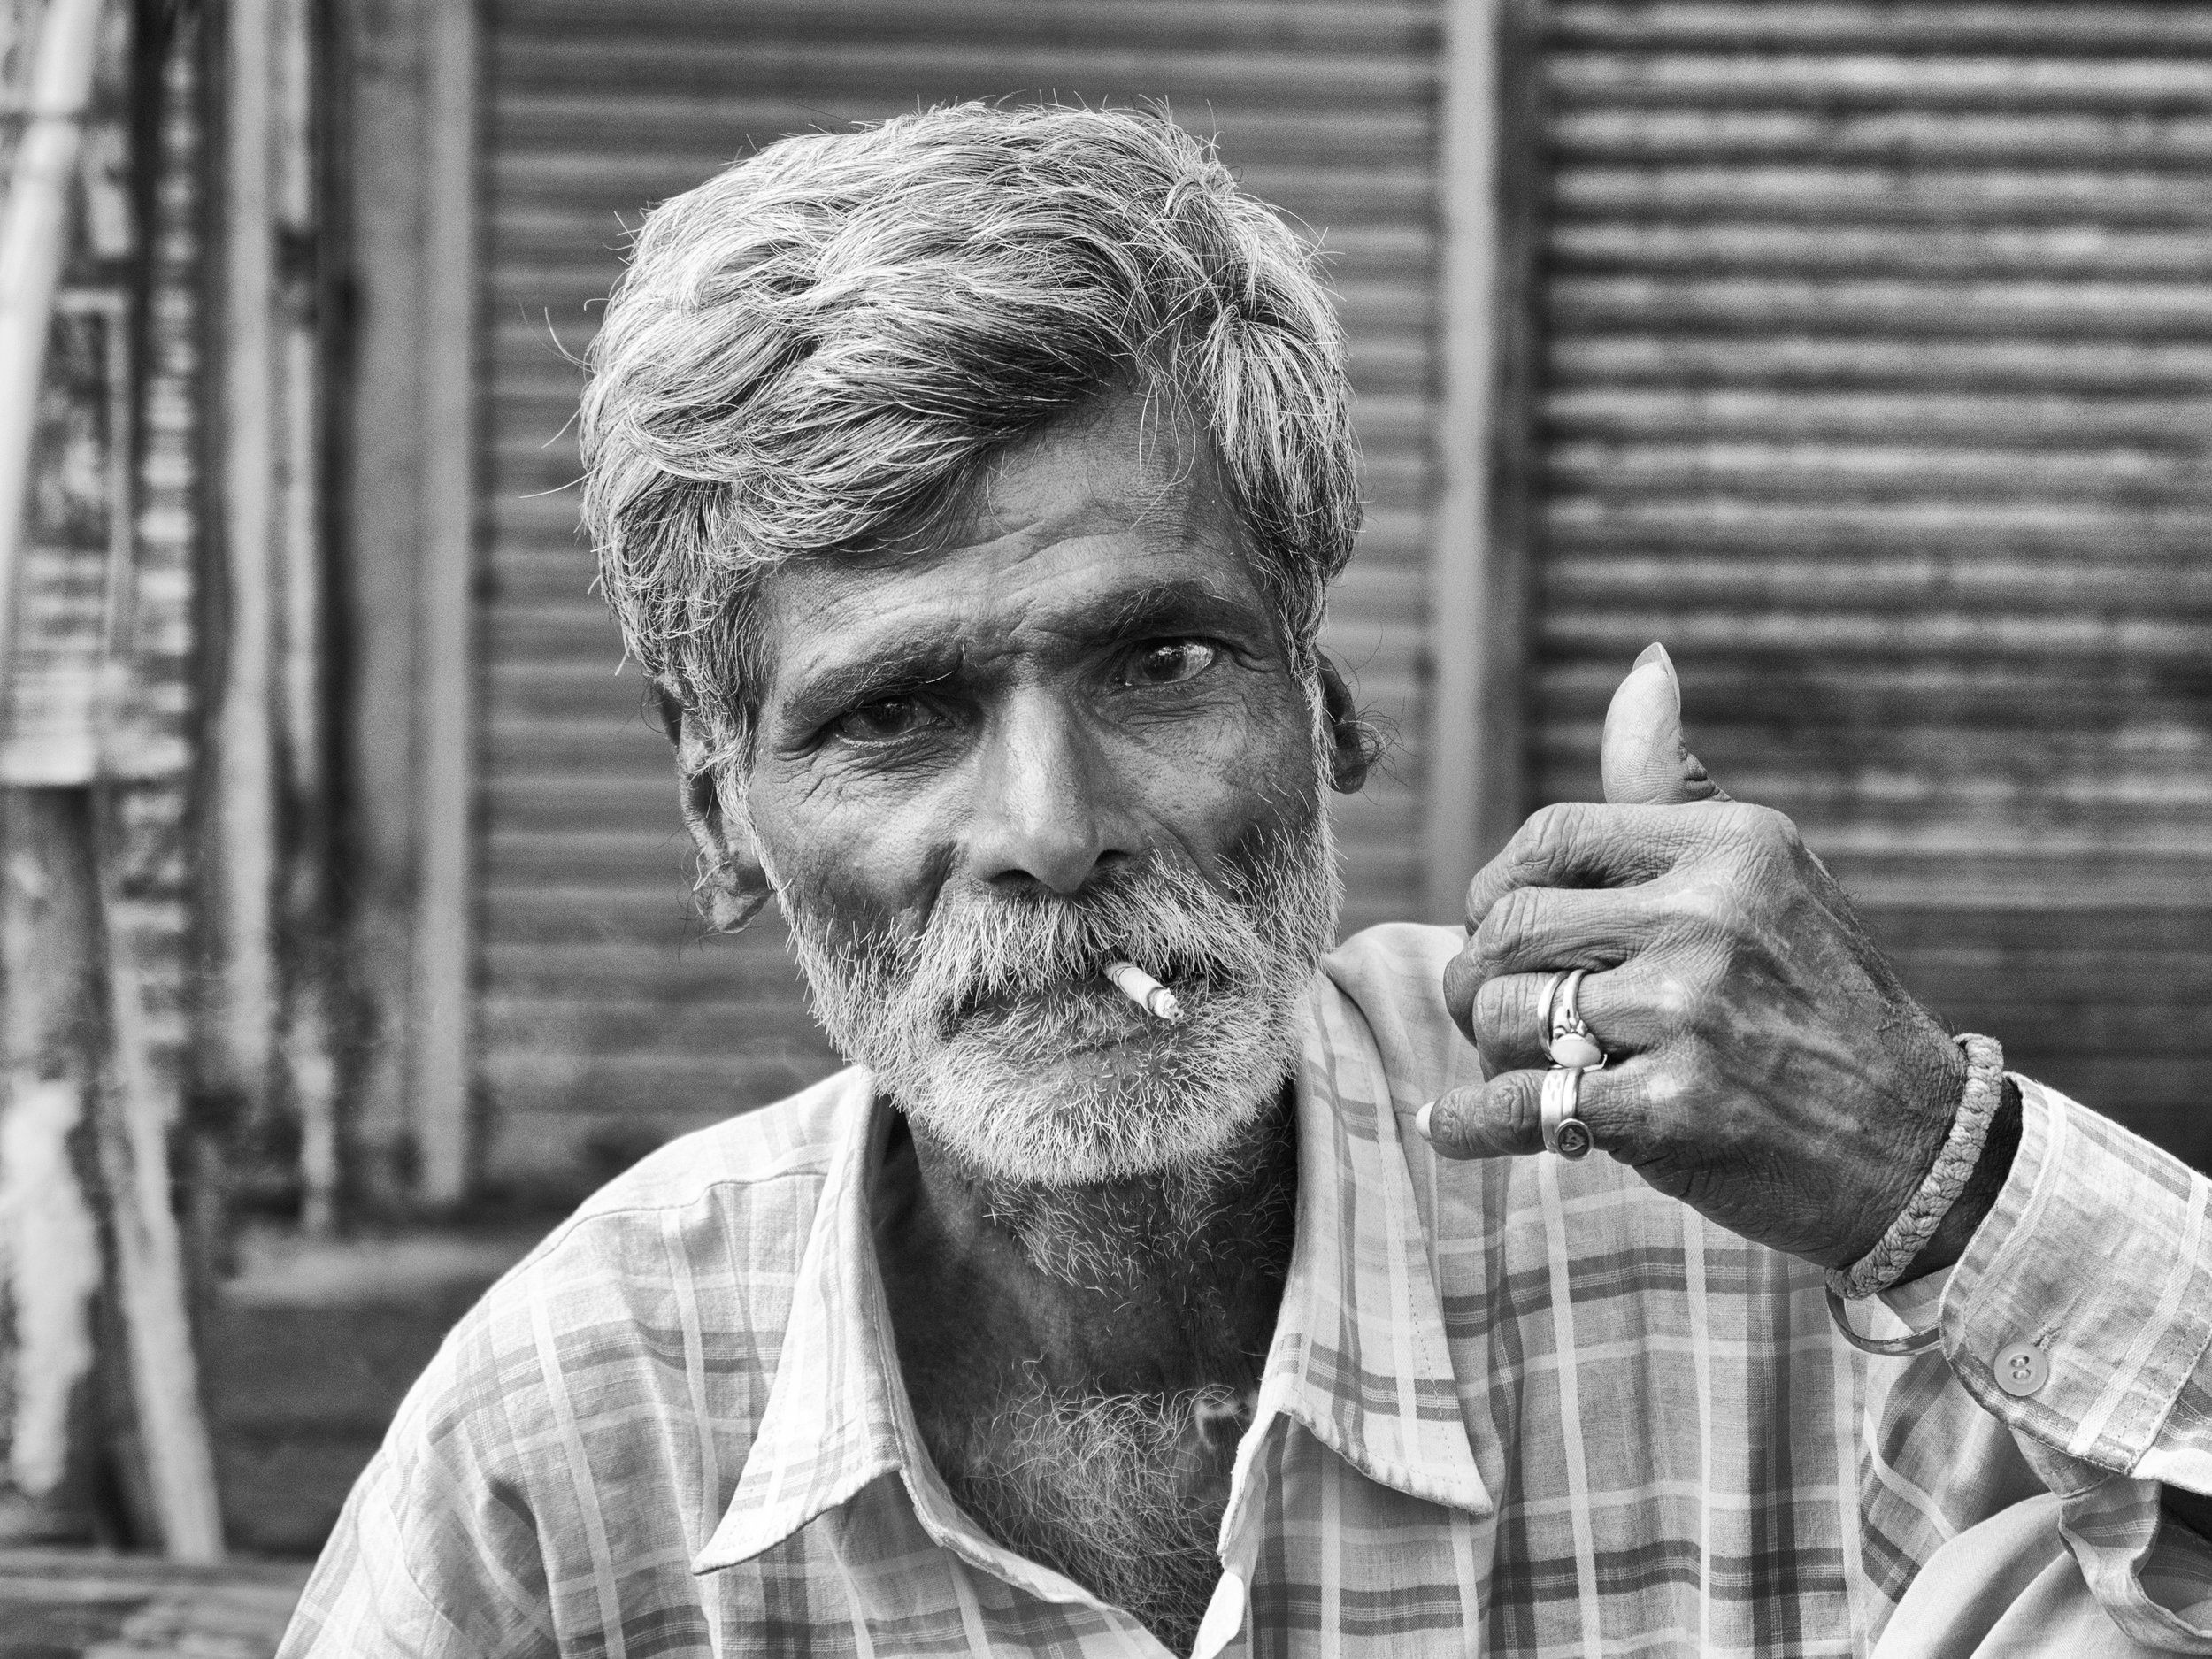 Man with Cigarette at Spice Market in Black and White - Old Delhi, India - Copyright 2016 Ralph Velasco.jpg